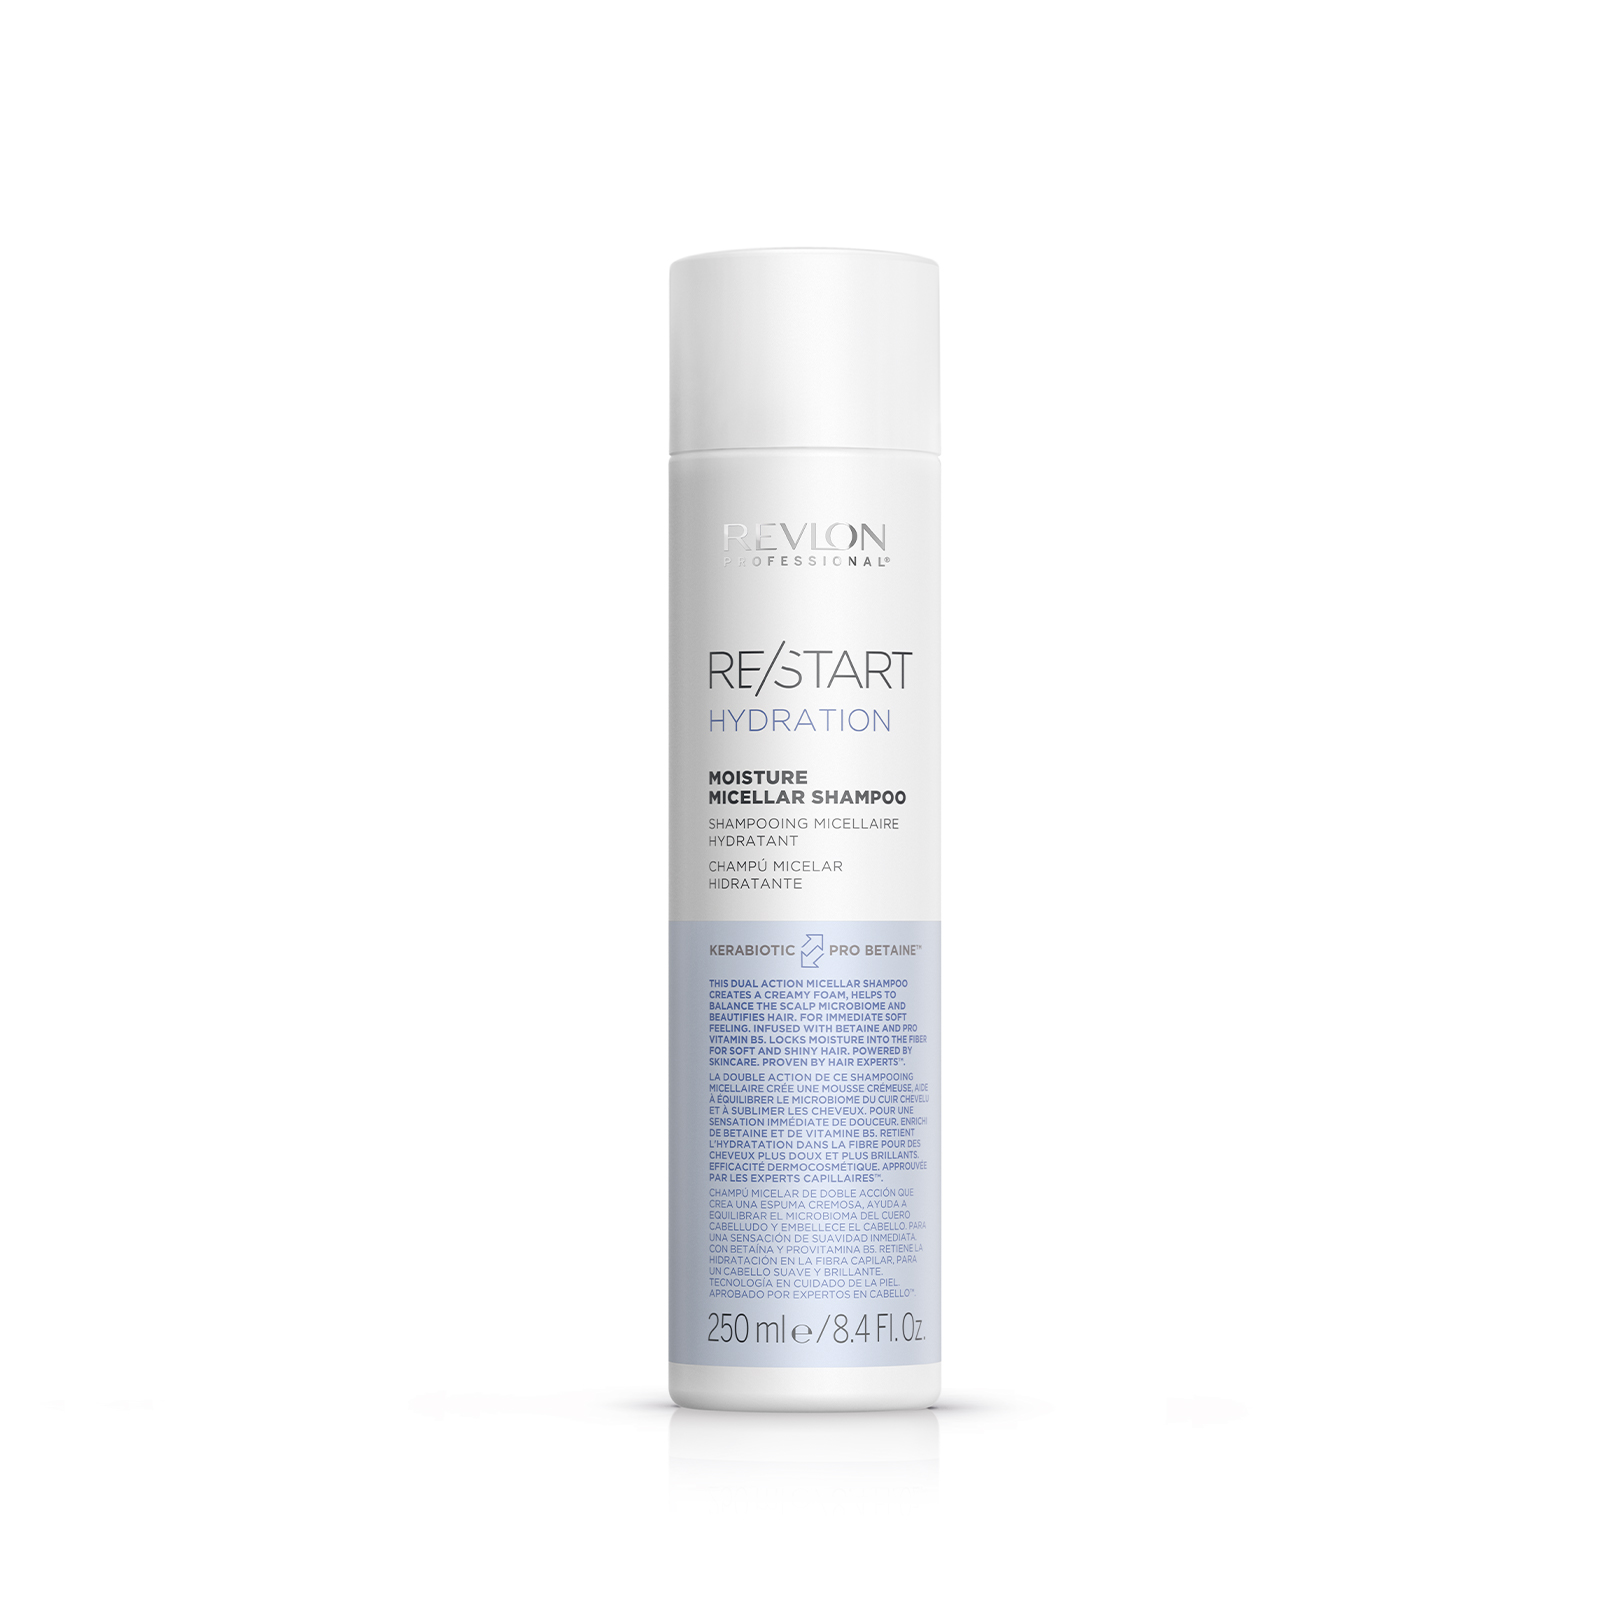 RE/START™ Hydration Moisture - Micellar Shampoo Revlon Professional